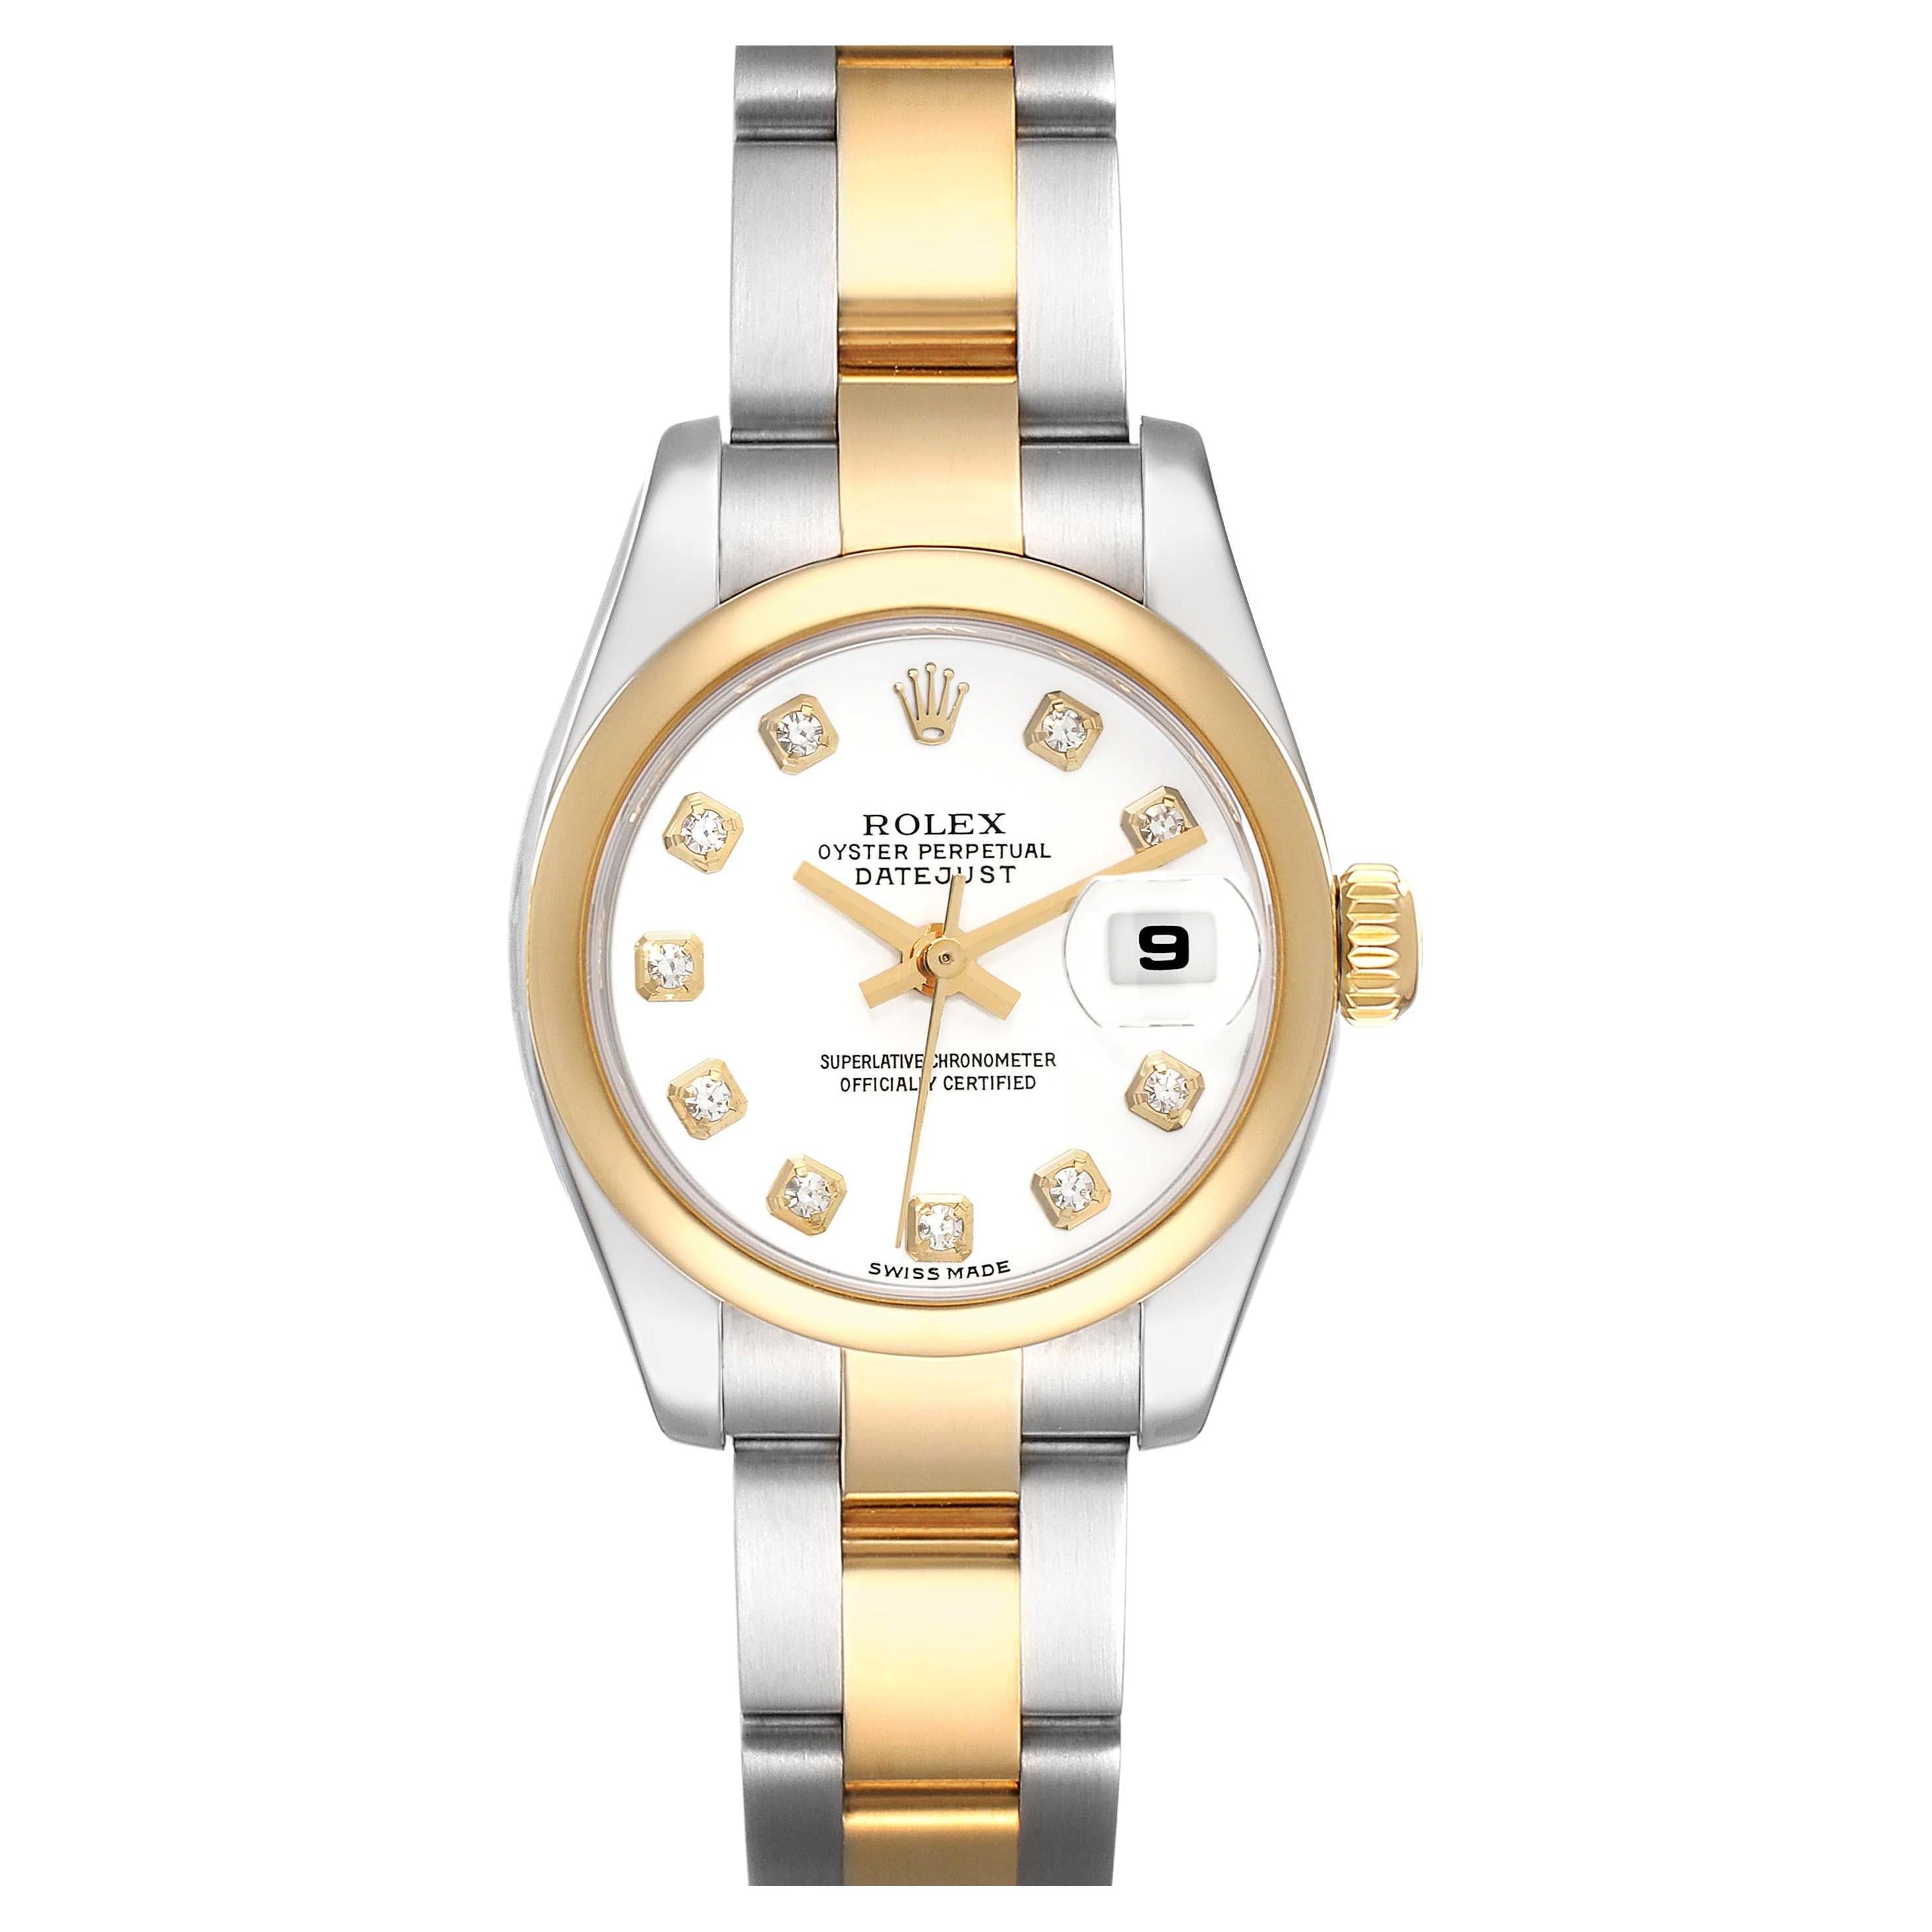 Rolex Datejust White Diamond Dial Steel Yellow Gold Ladies Watch 179163